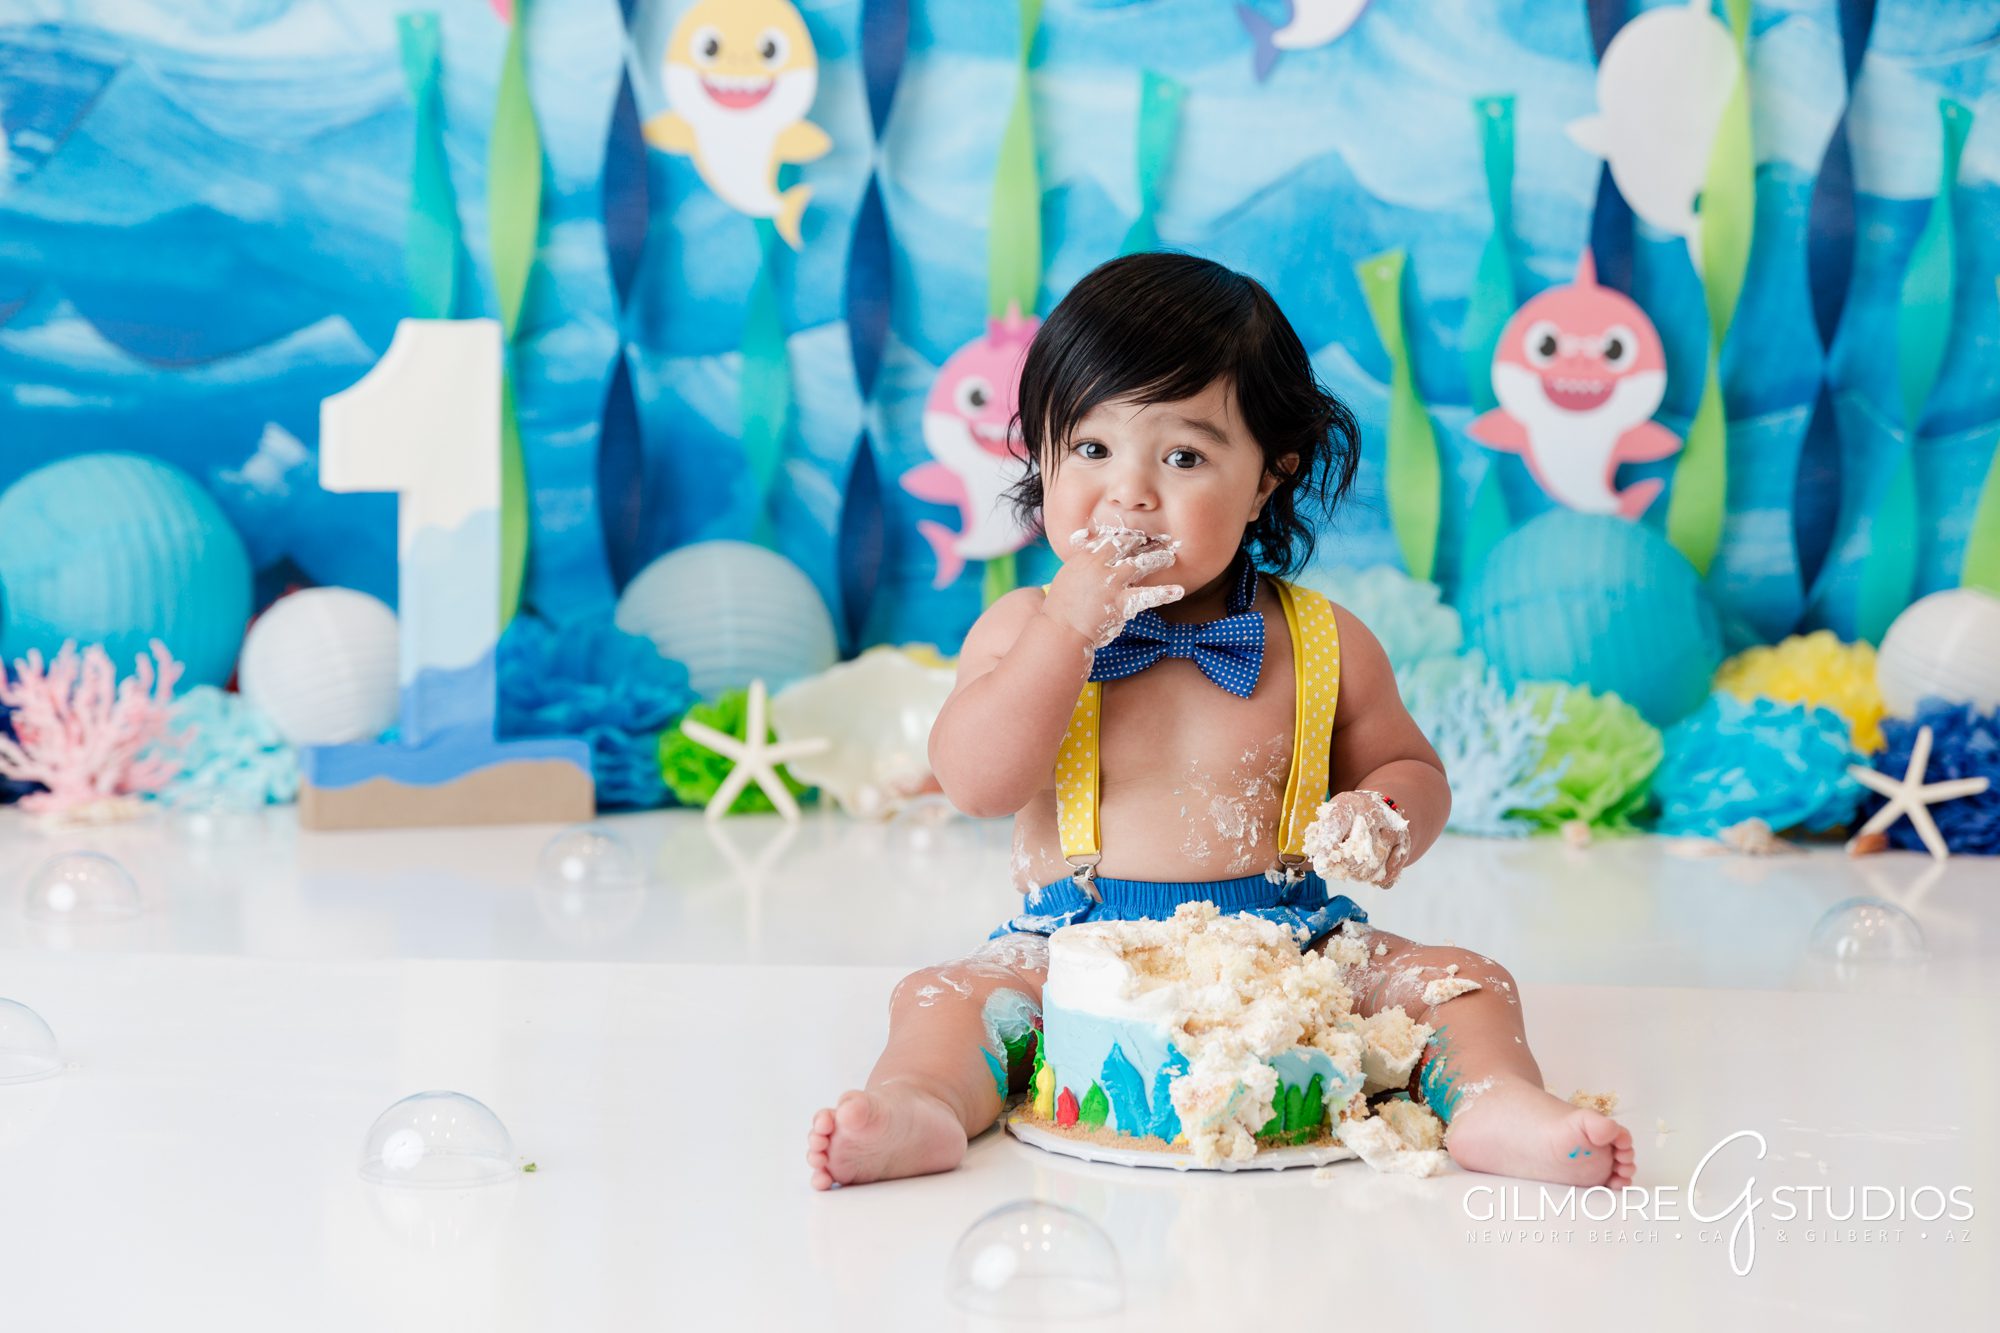 Baby Shark Cake Smash Theme, birthday cake, custom cakes, set design, boy's birthday party, gilmore studios, gilbert AZ children's portrait studio